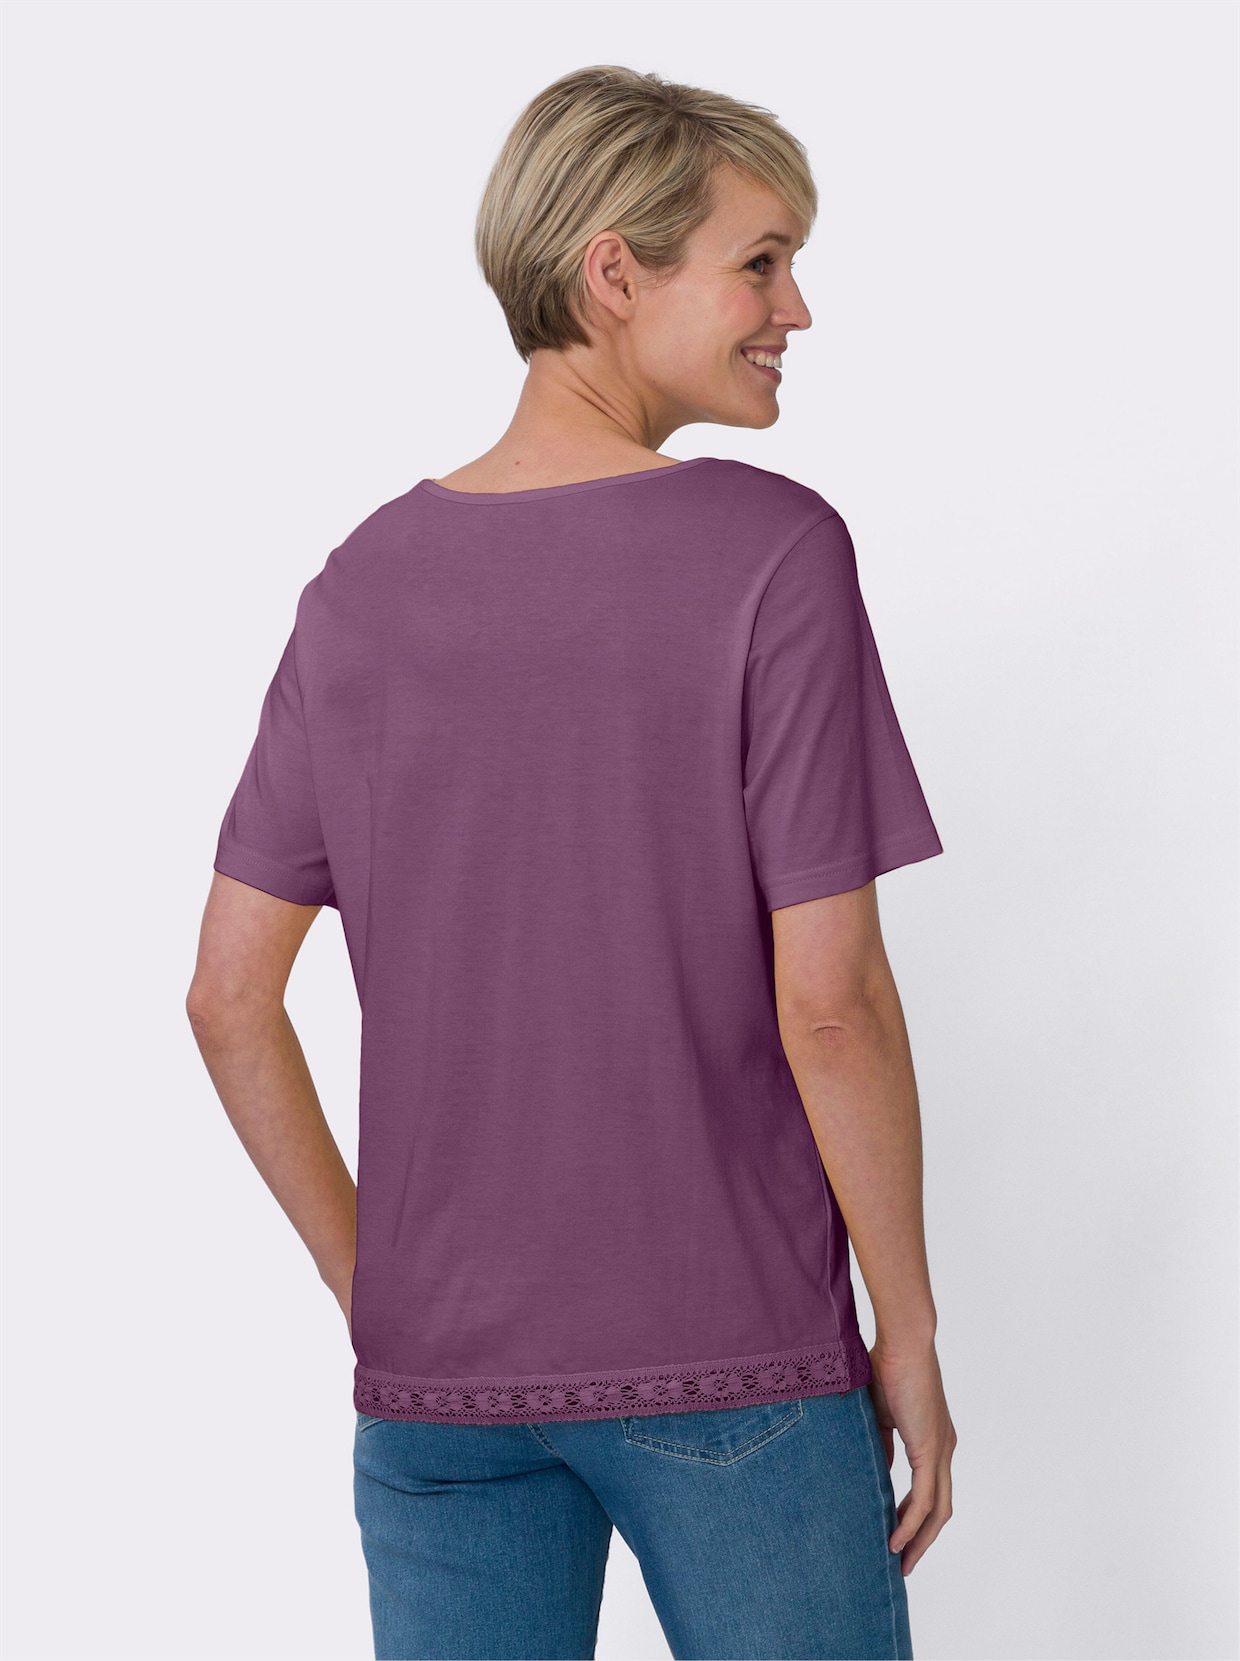 Kurzarm-Shirt - violett